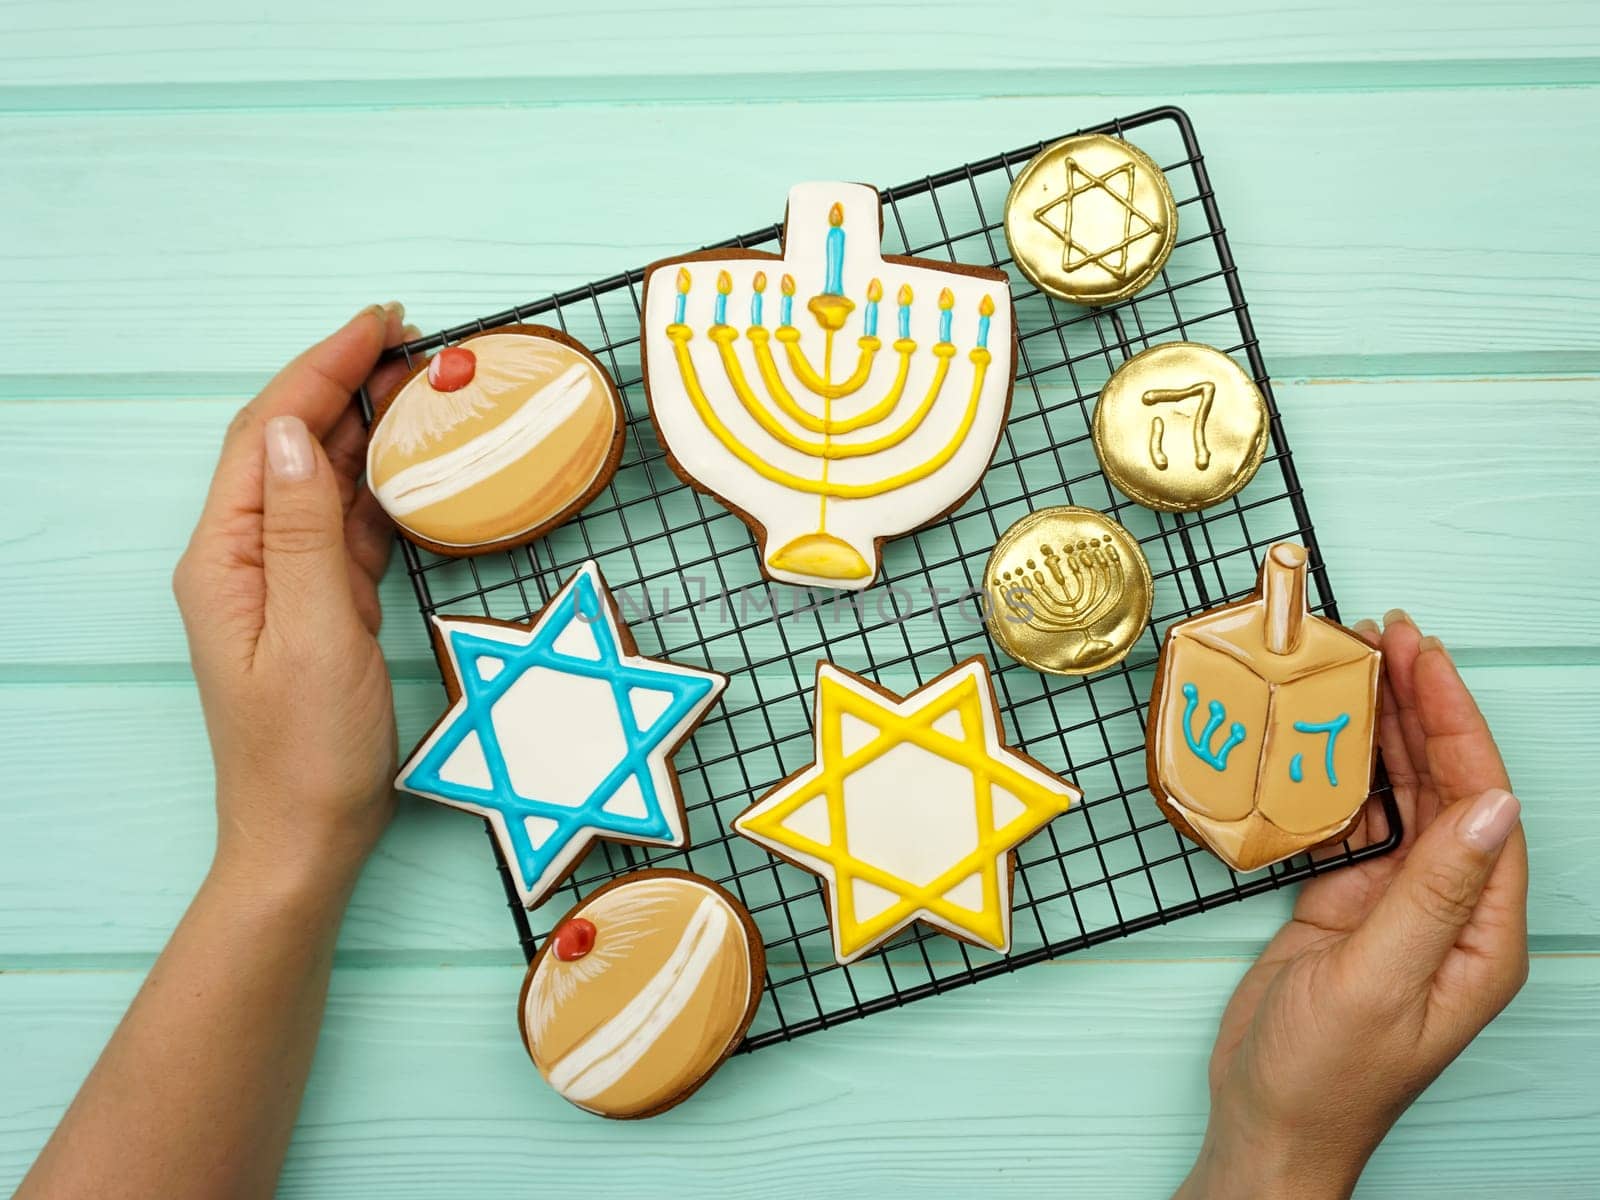 Celebrating Hanukkah. The concept of the Hanukkah holiday. by Spirina